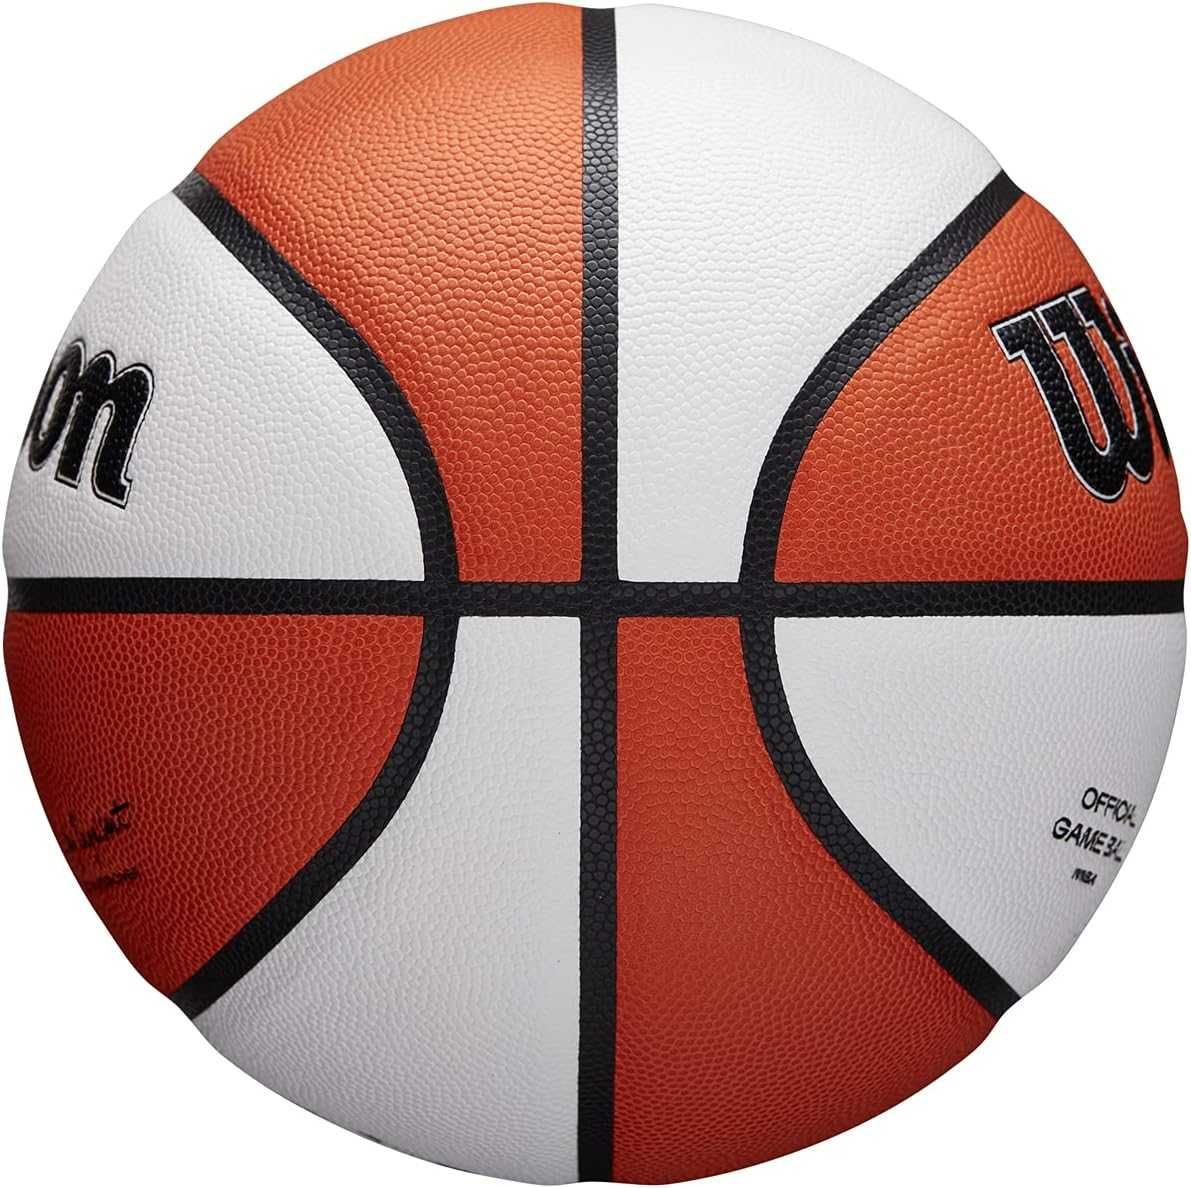 Мяч баскетбольный Wilson WNBA Official Game Ball! Размер 6. Новый!